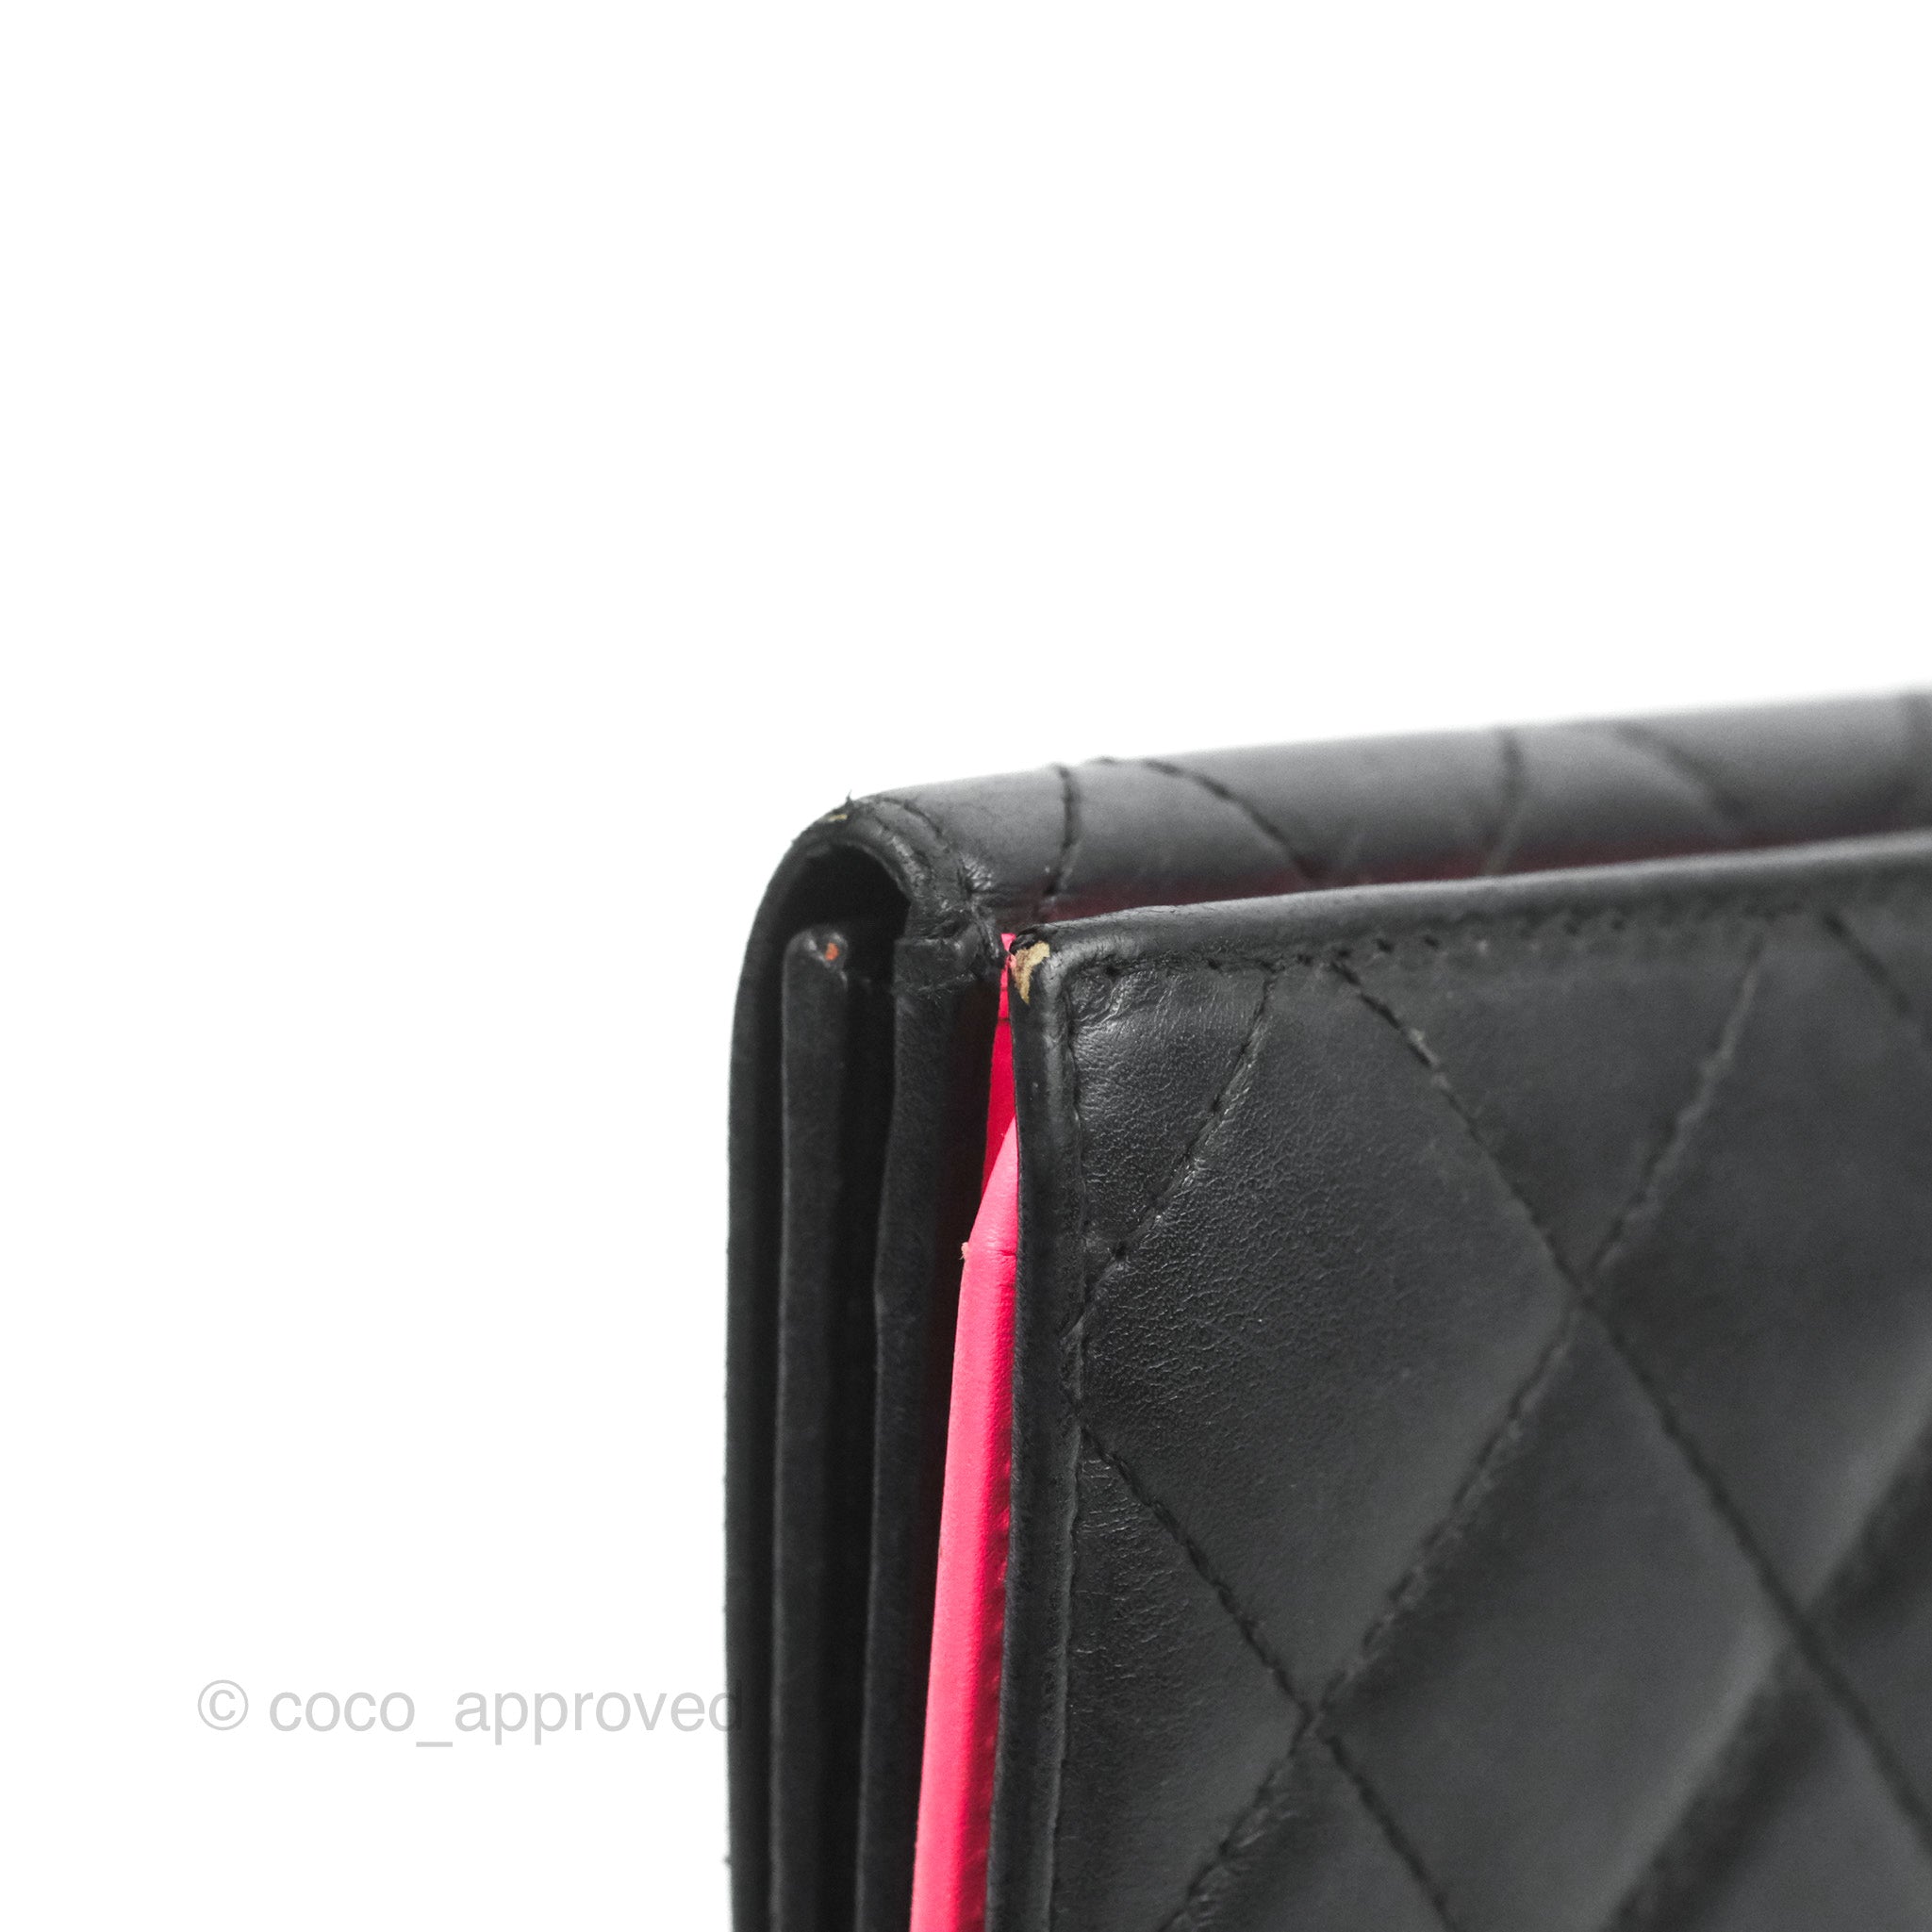 Chanel Cambon Wallet 367976